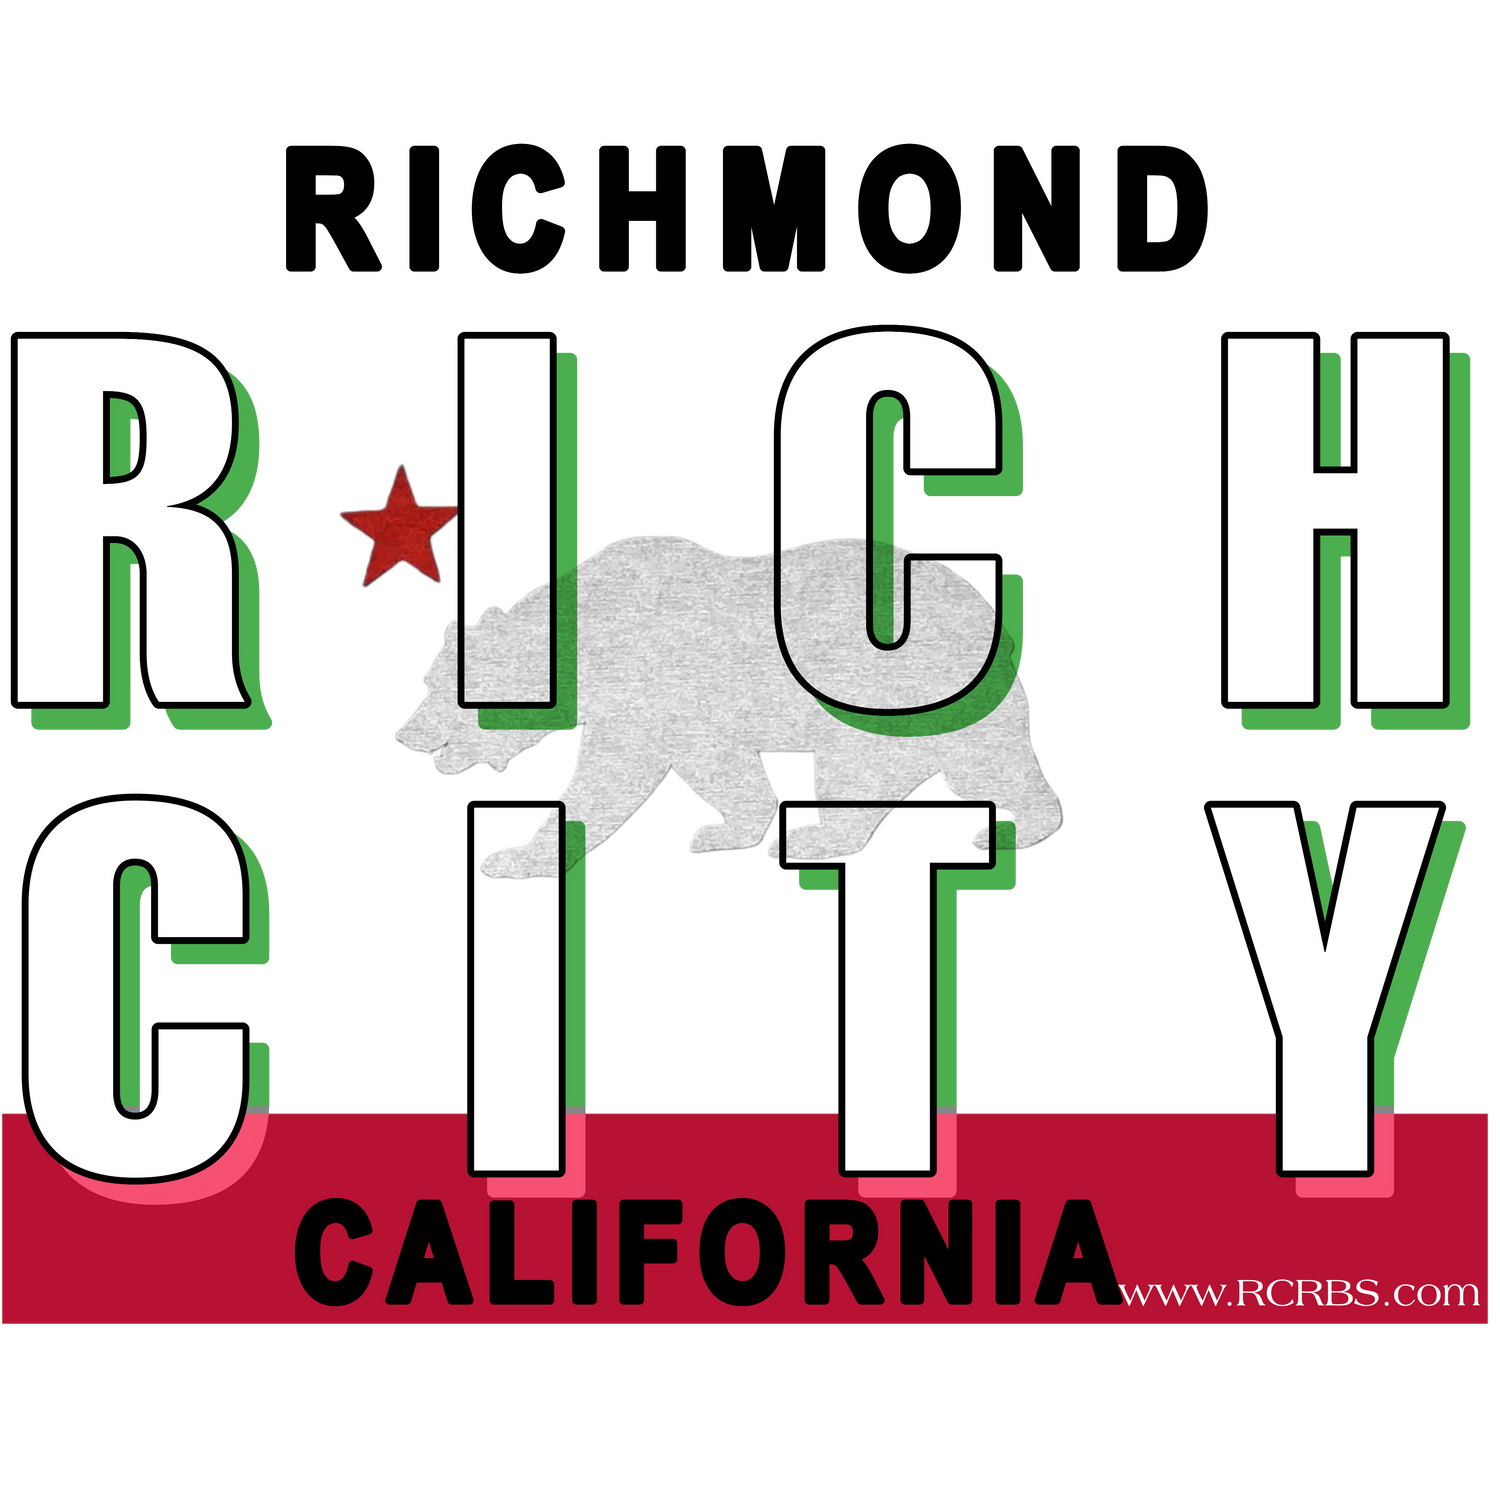 Richmondites